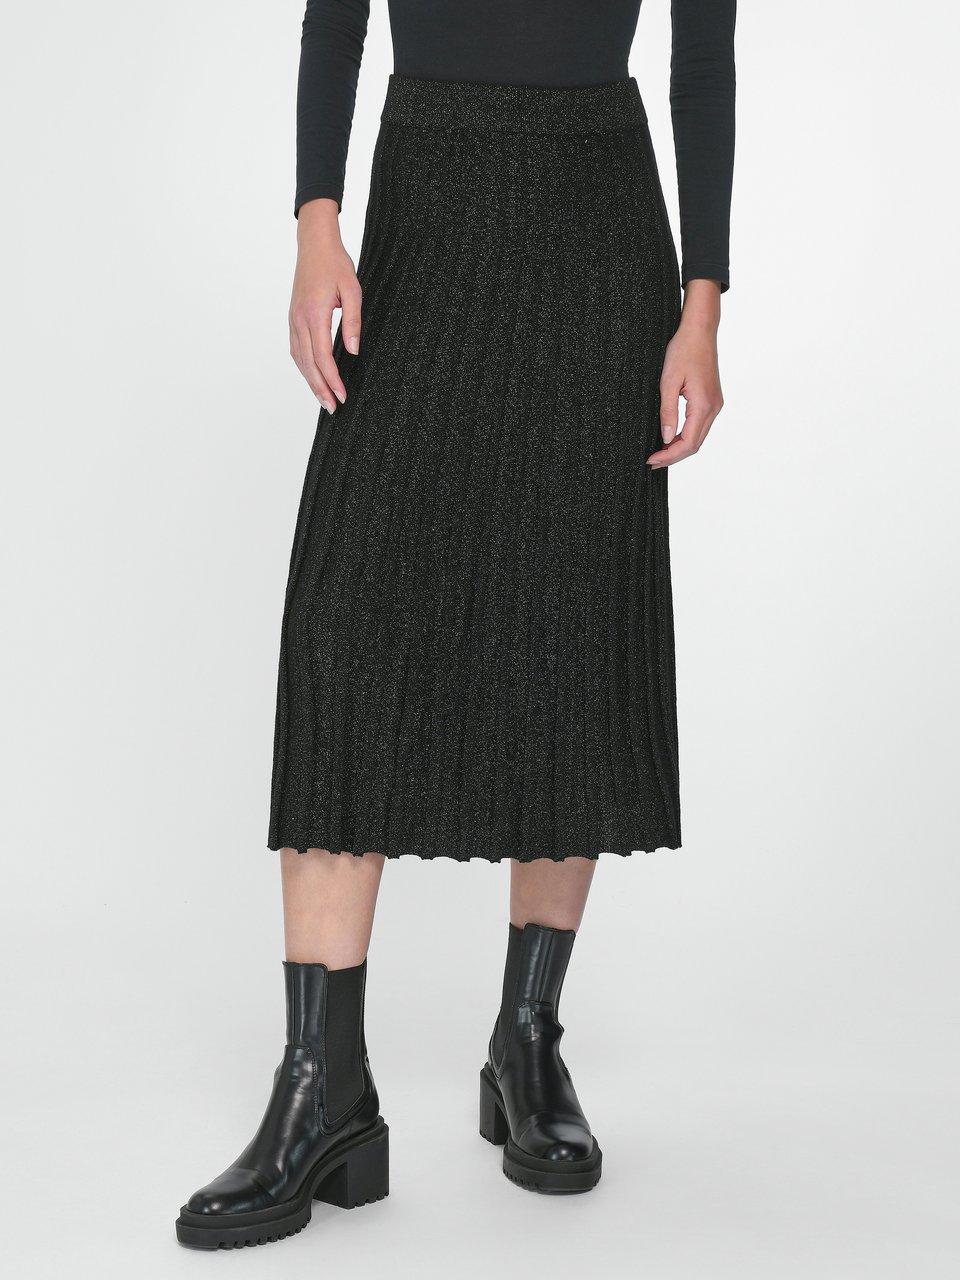 Uta Raasch - La jupe élégant plissé